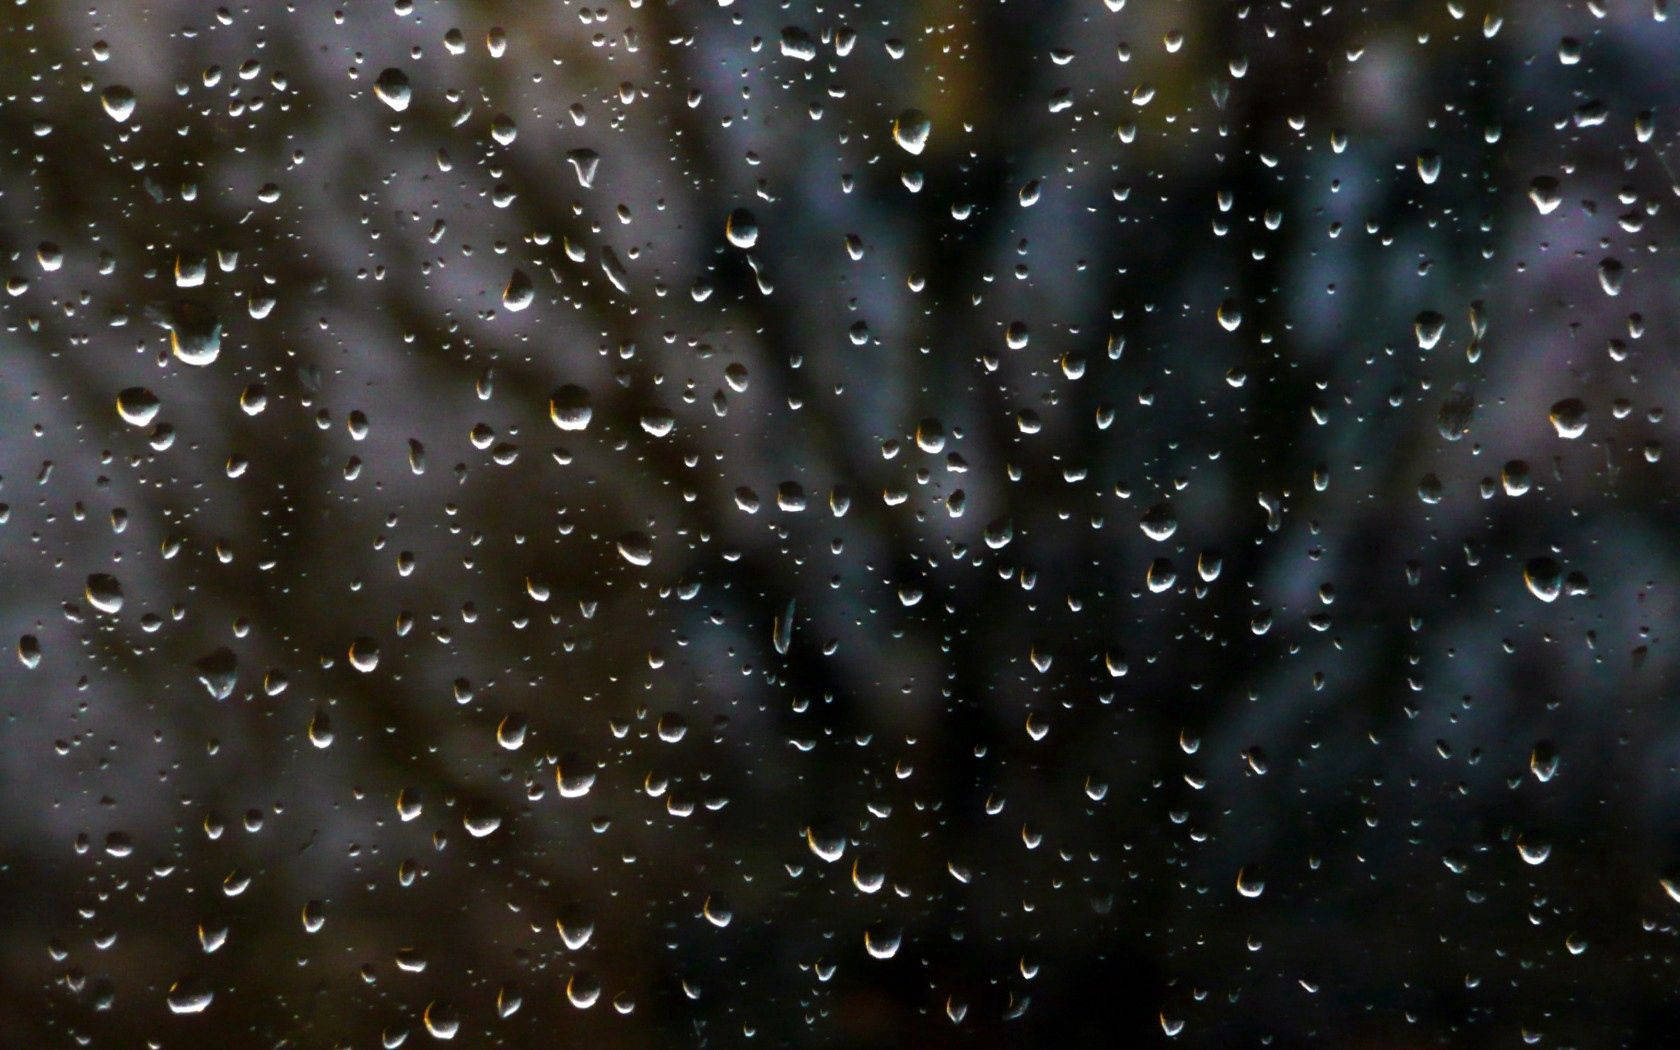 Rain Drops On A Window Background